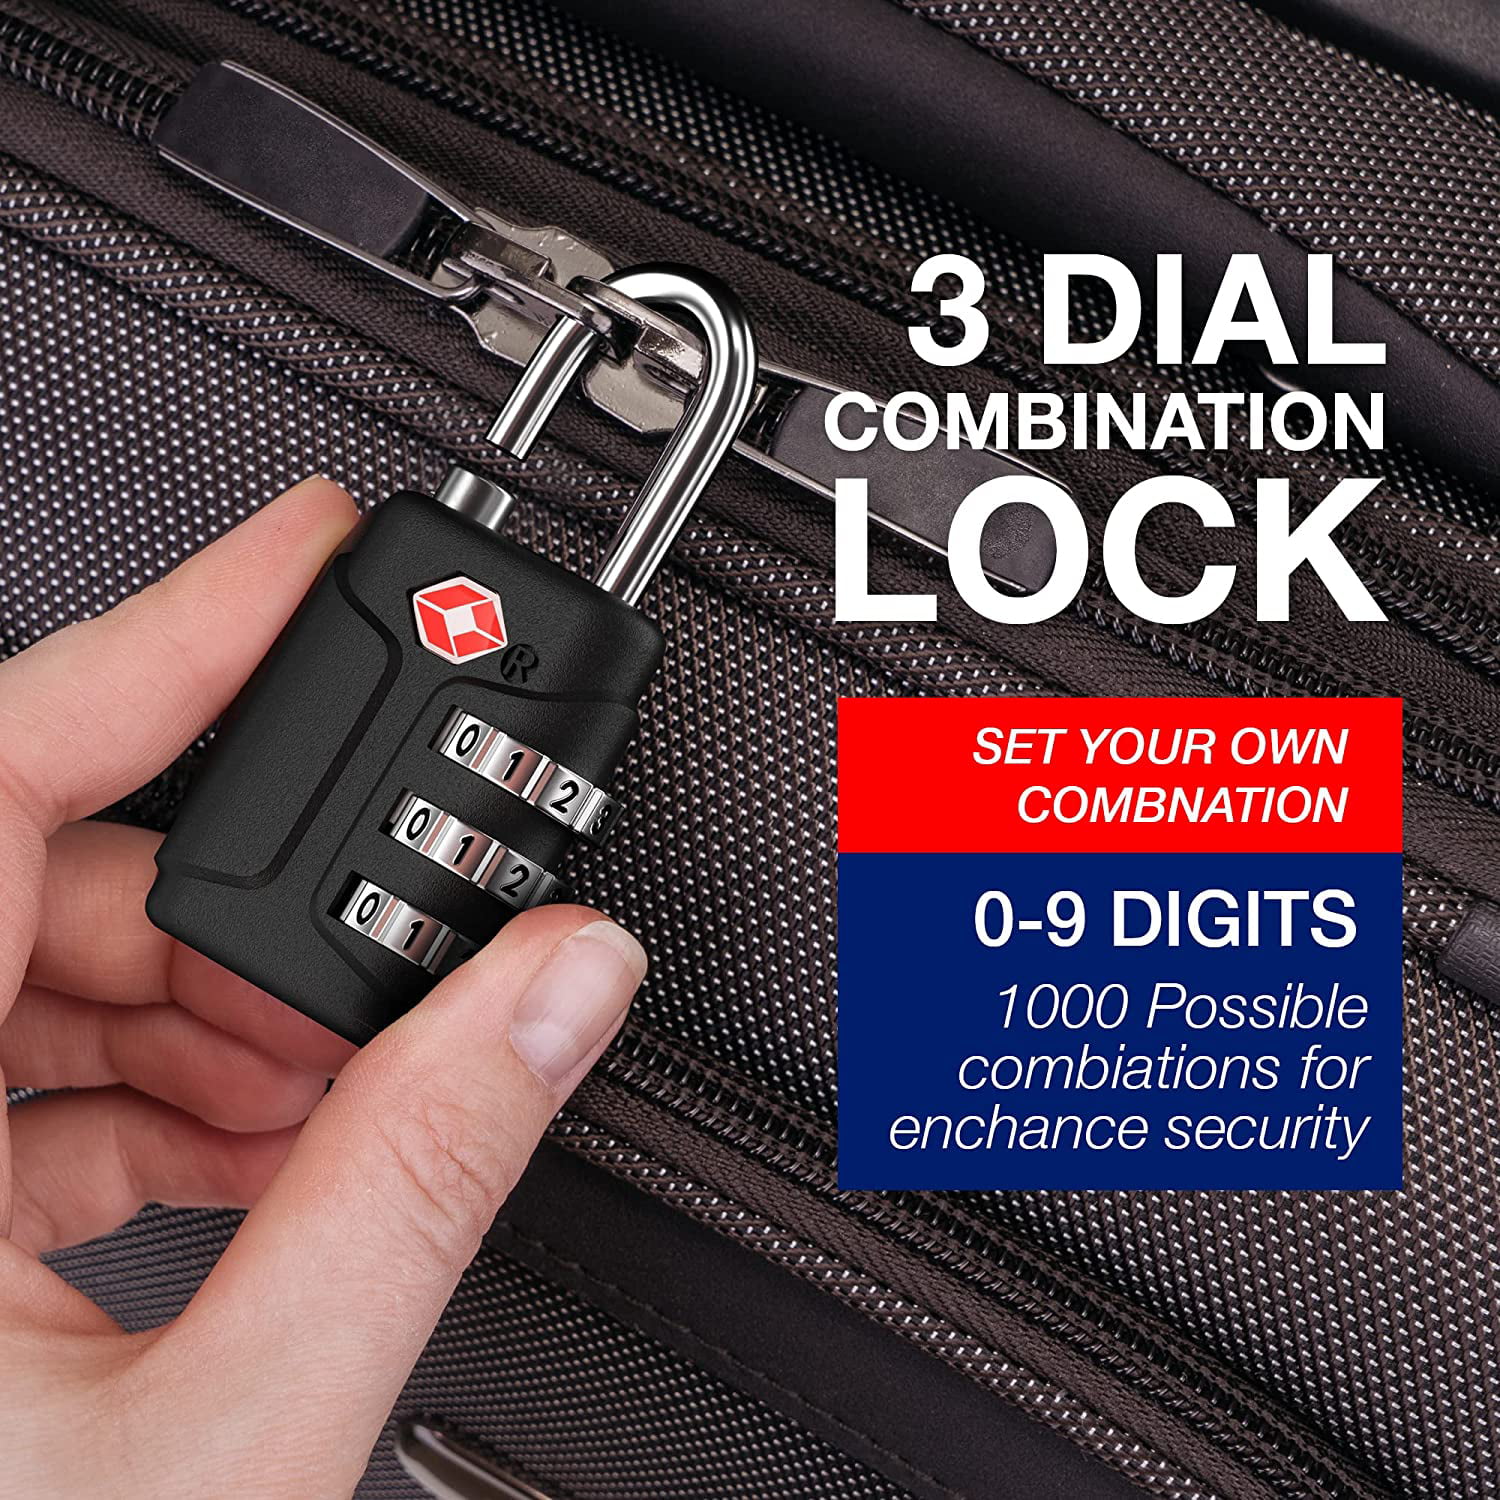 Kensington TSA Accepted Keyed Luggage Lock - 4-Pack